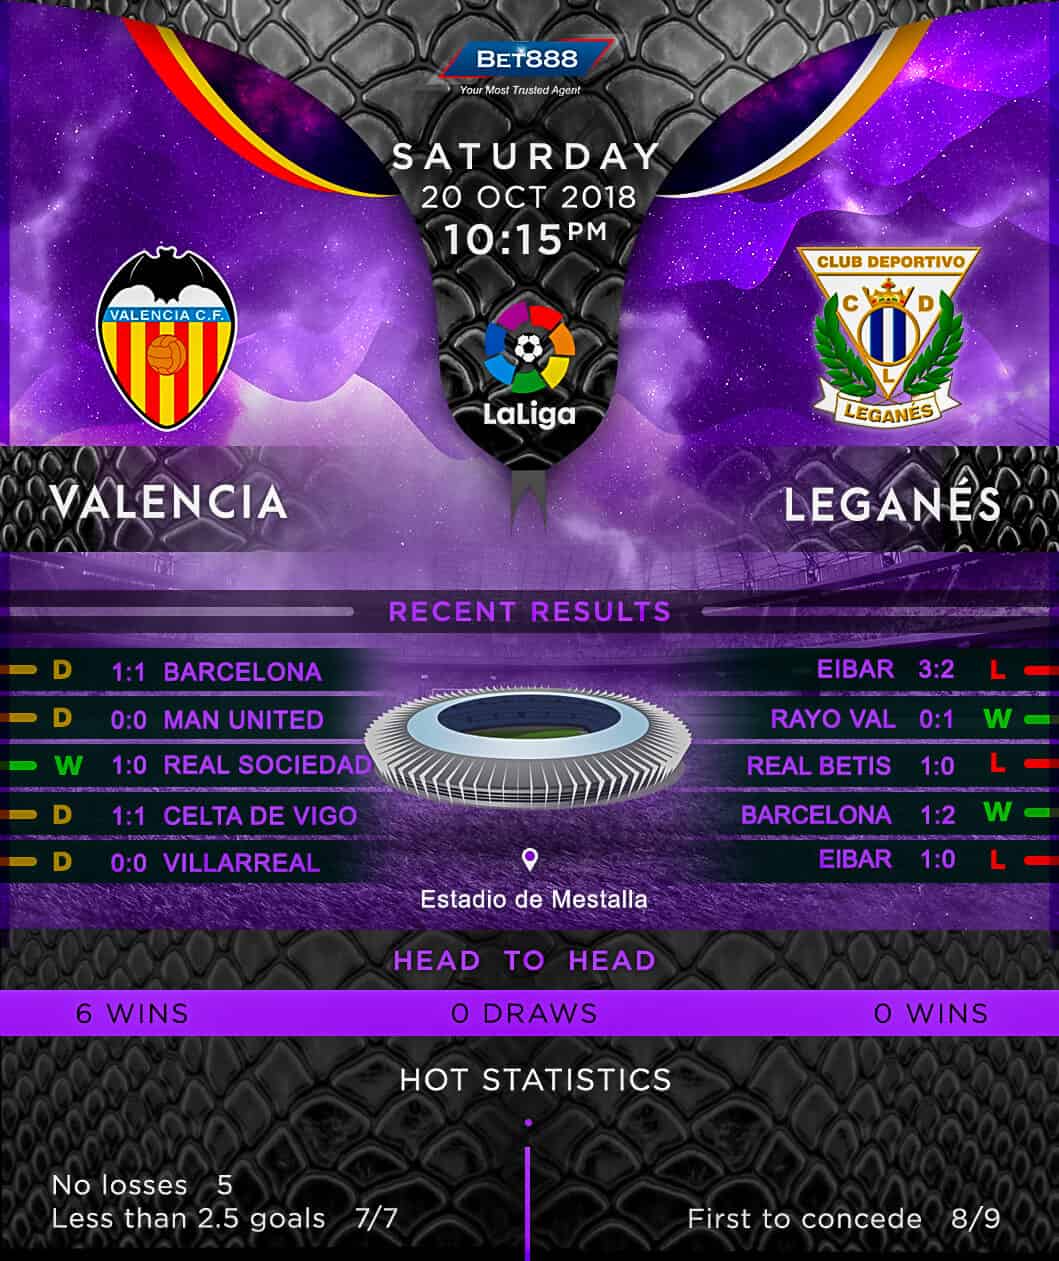 Valencia vs Leganes 20/10/18